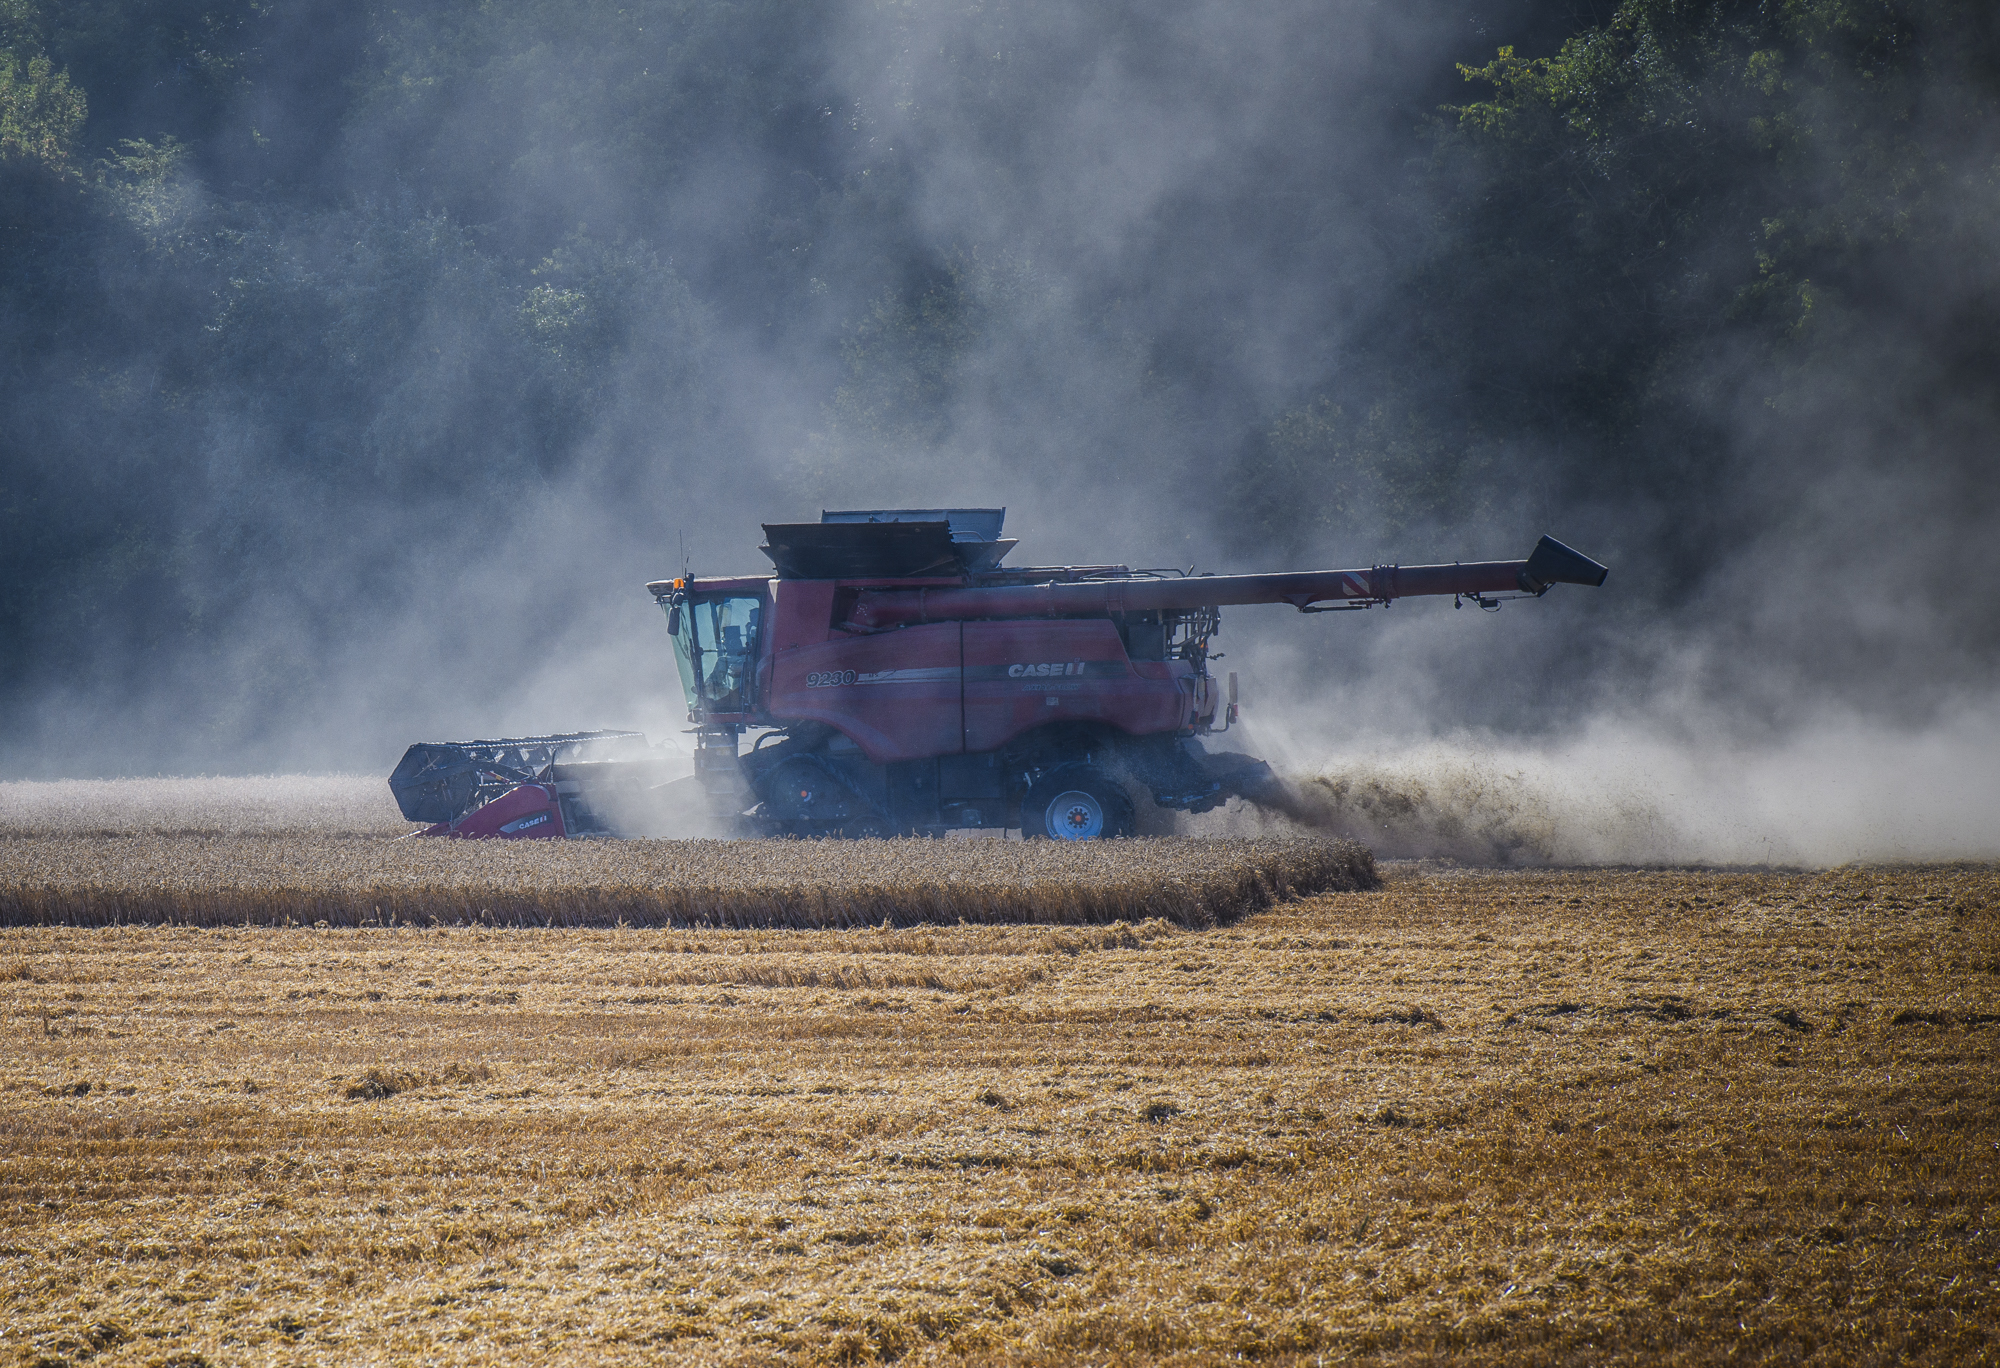 Case 9230 combine harvester in dust cloud